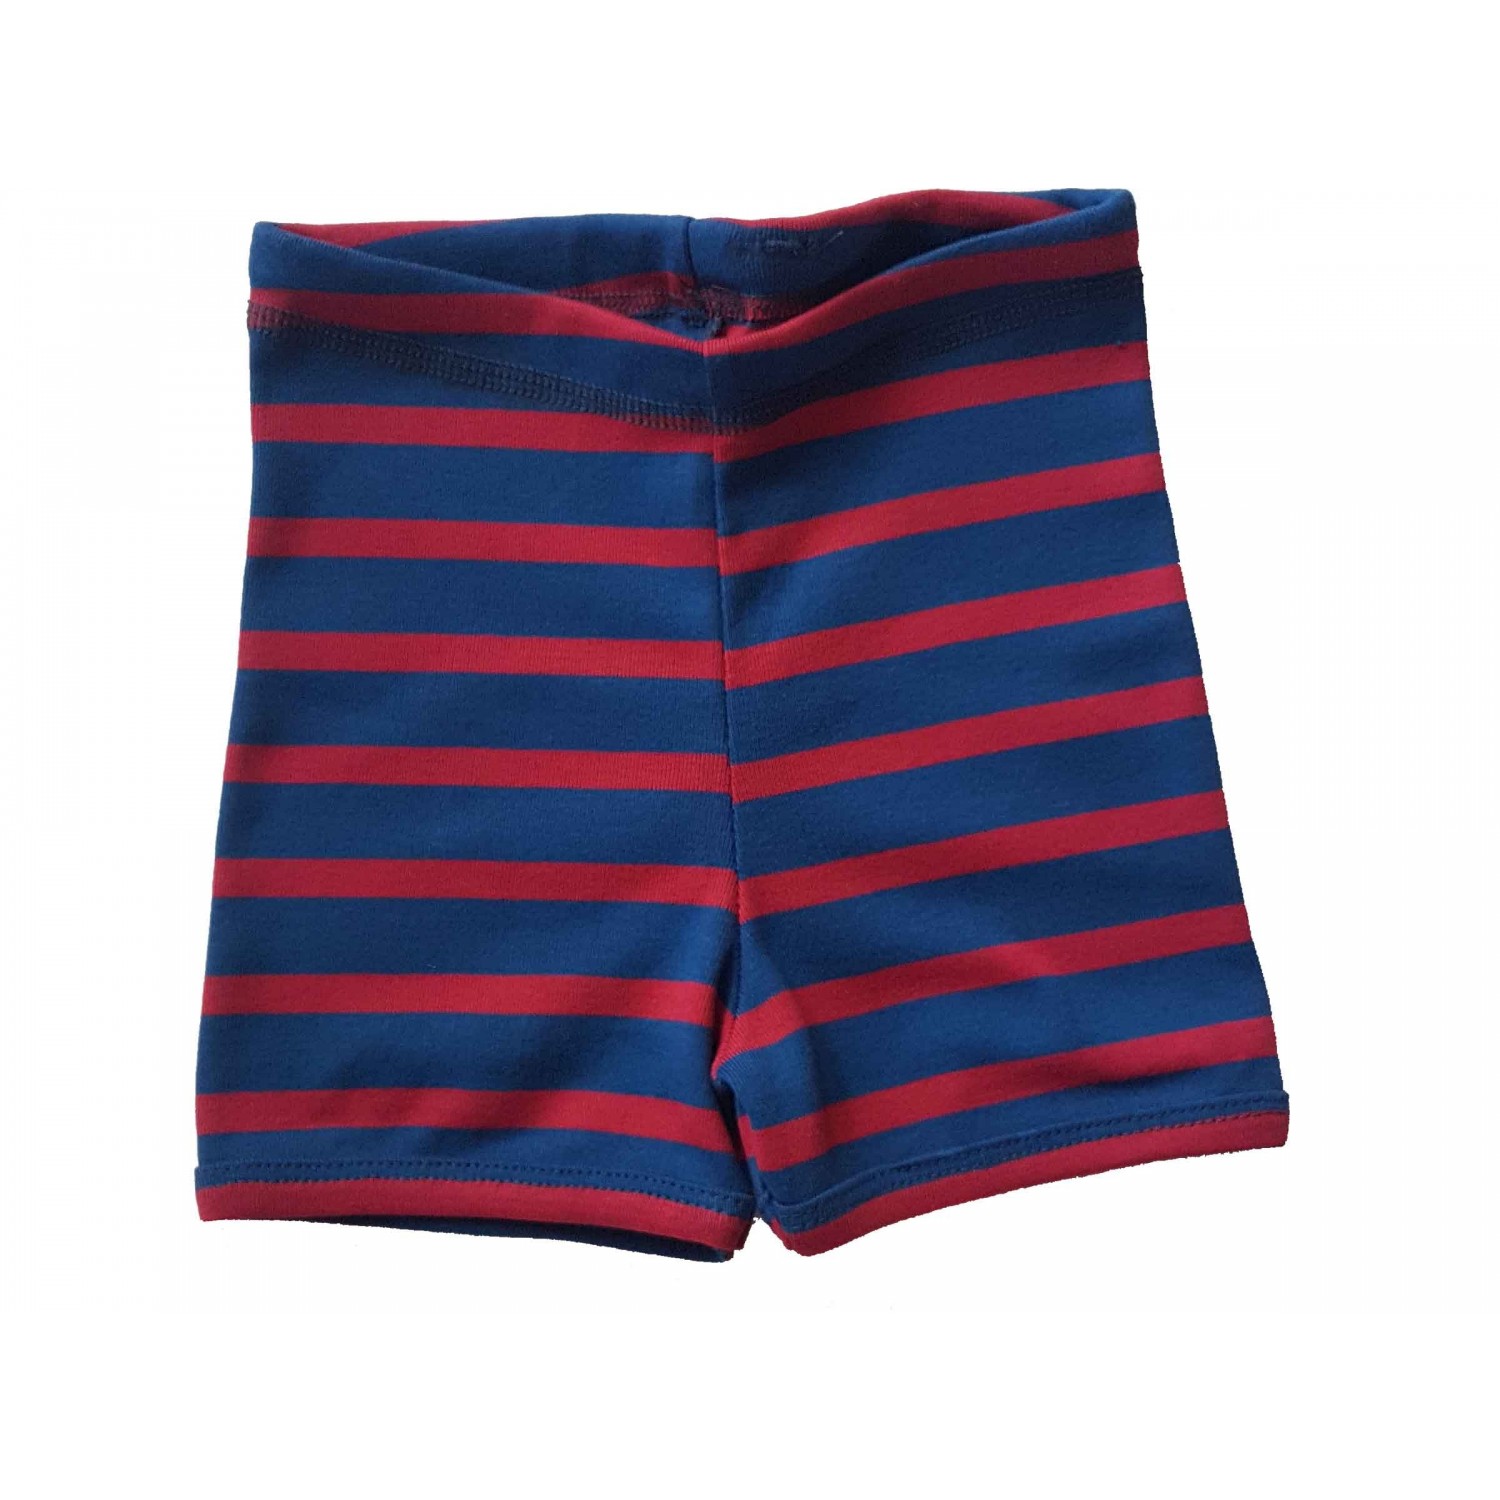 Unisex kids pants & organic cotton shorts for girls & boys, red-blue | Ulalue